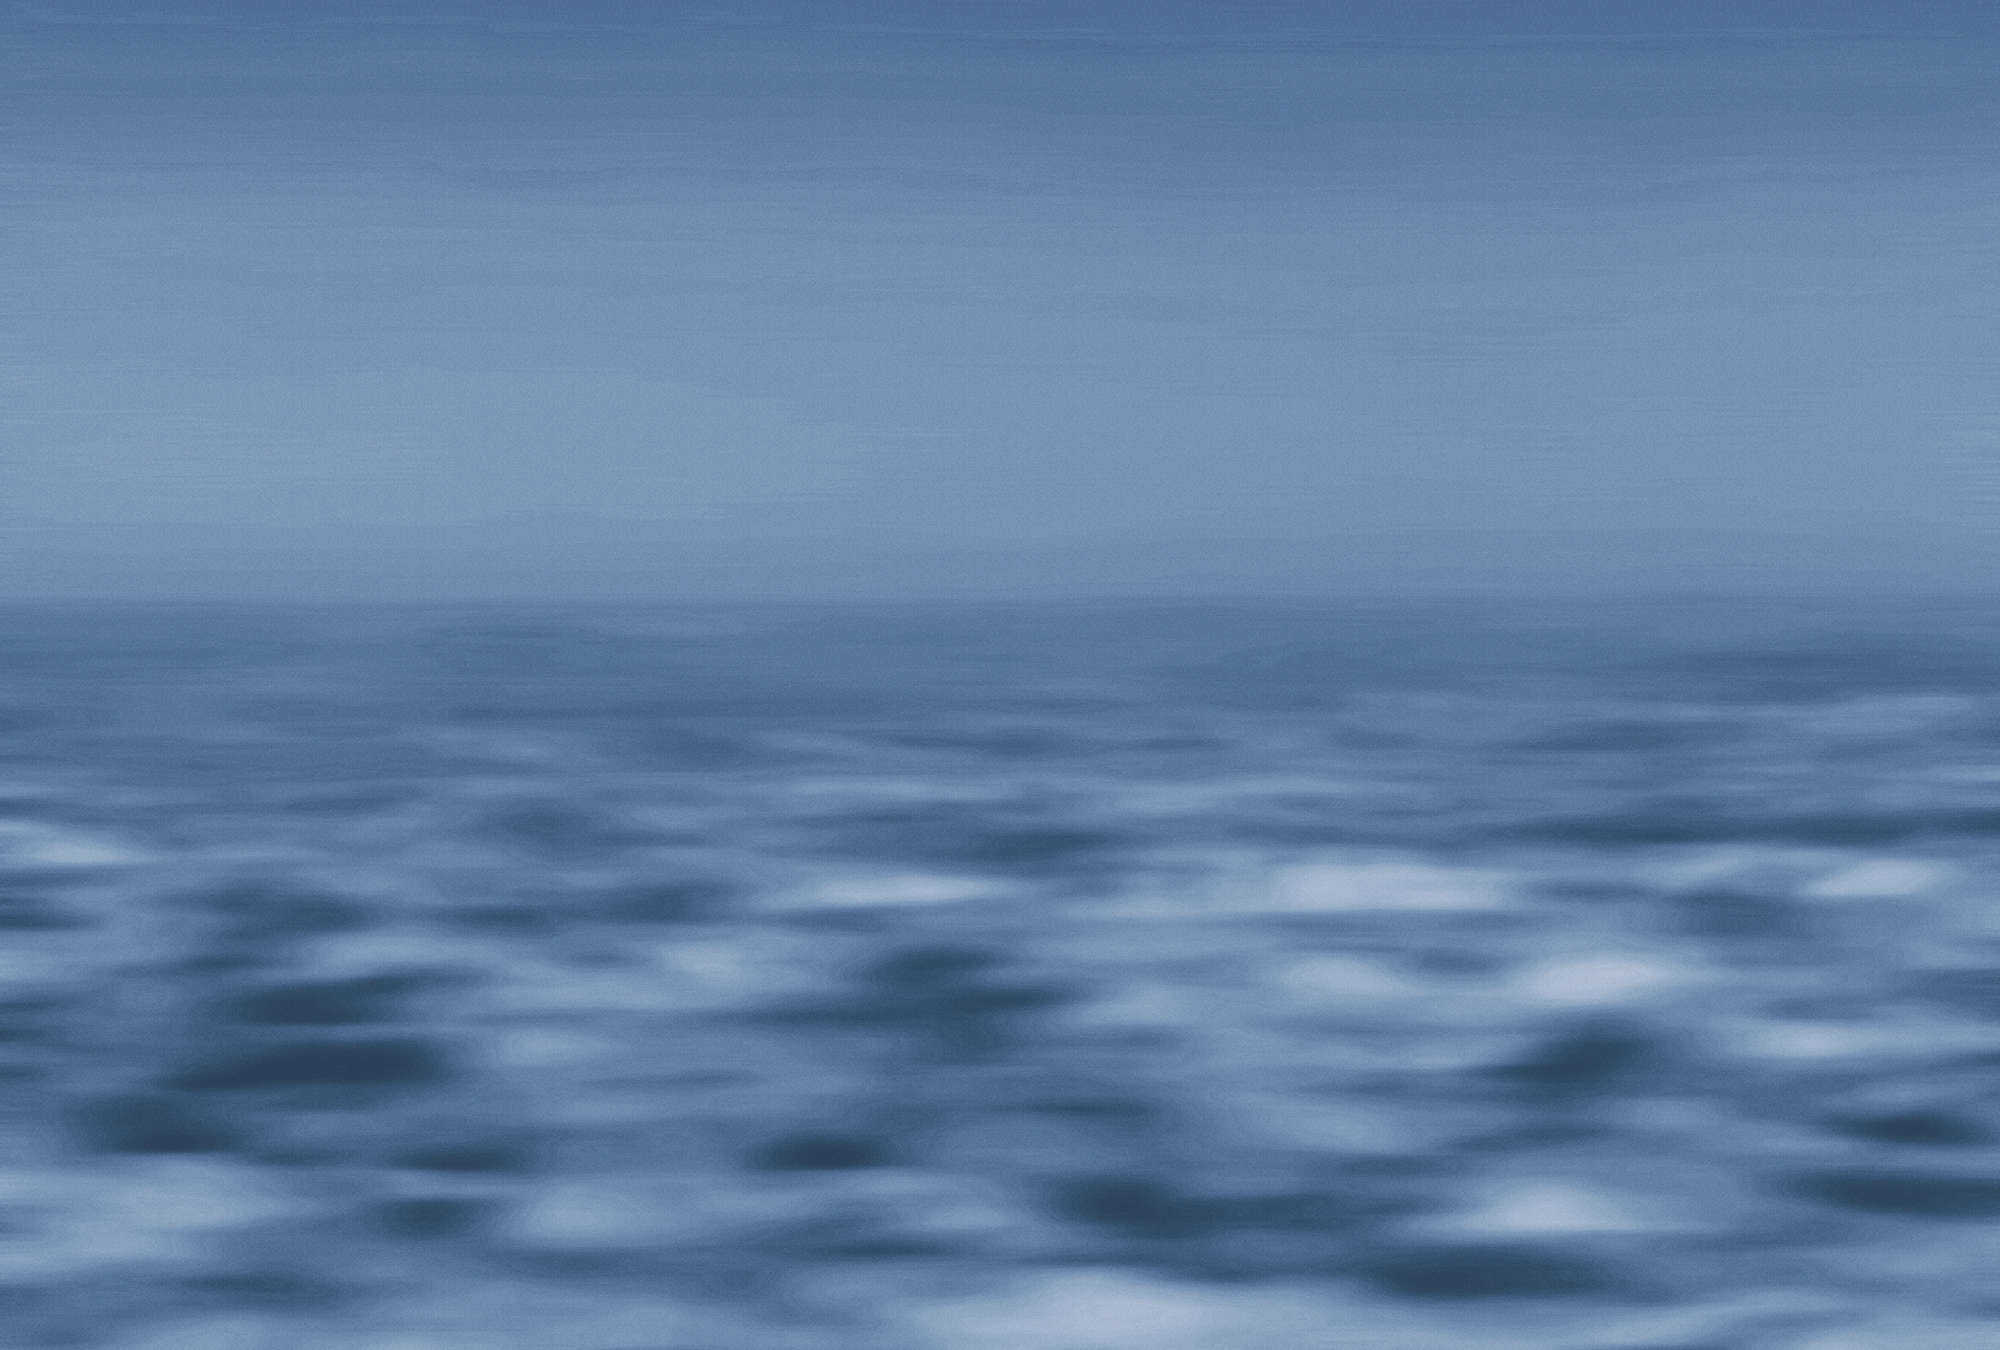             Papier peint marin Mer, monde aquatique abstrait - bleu, blanc
        